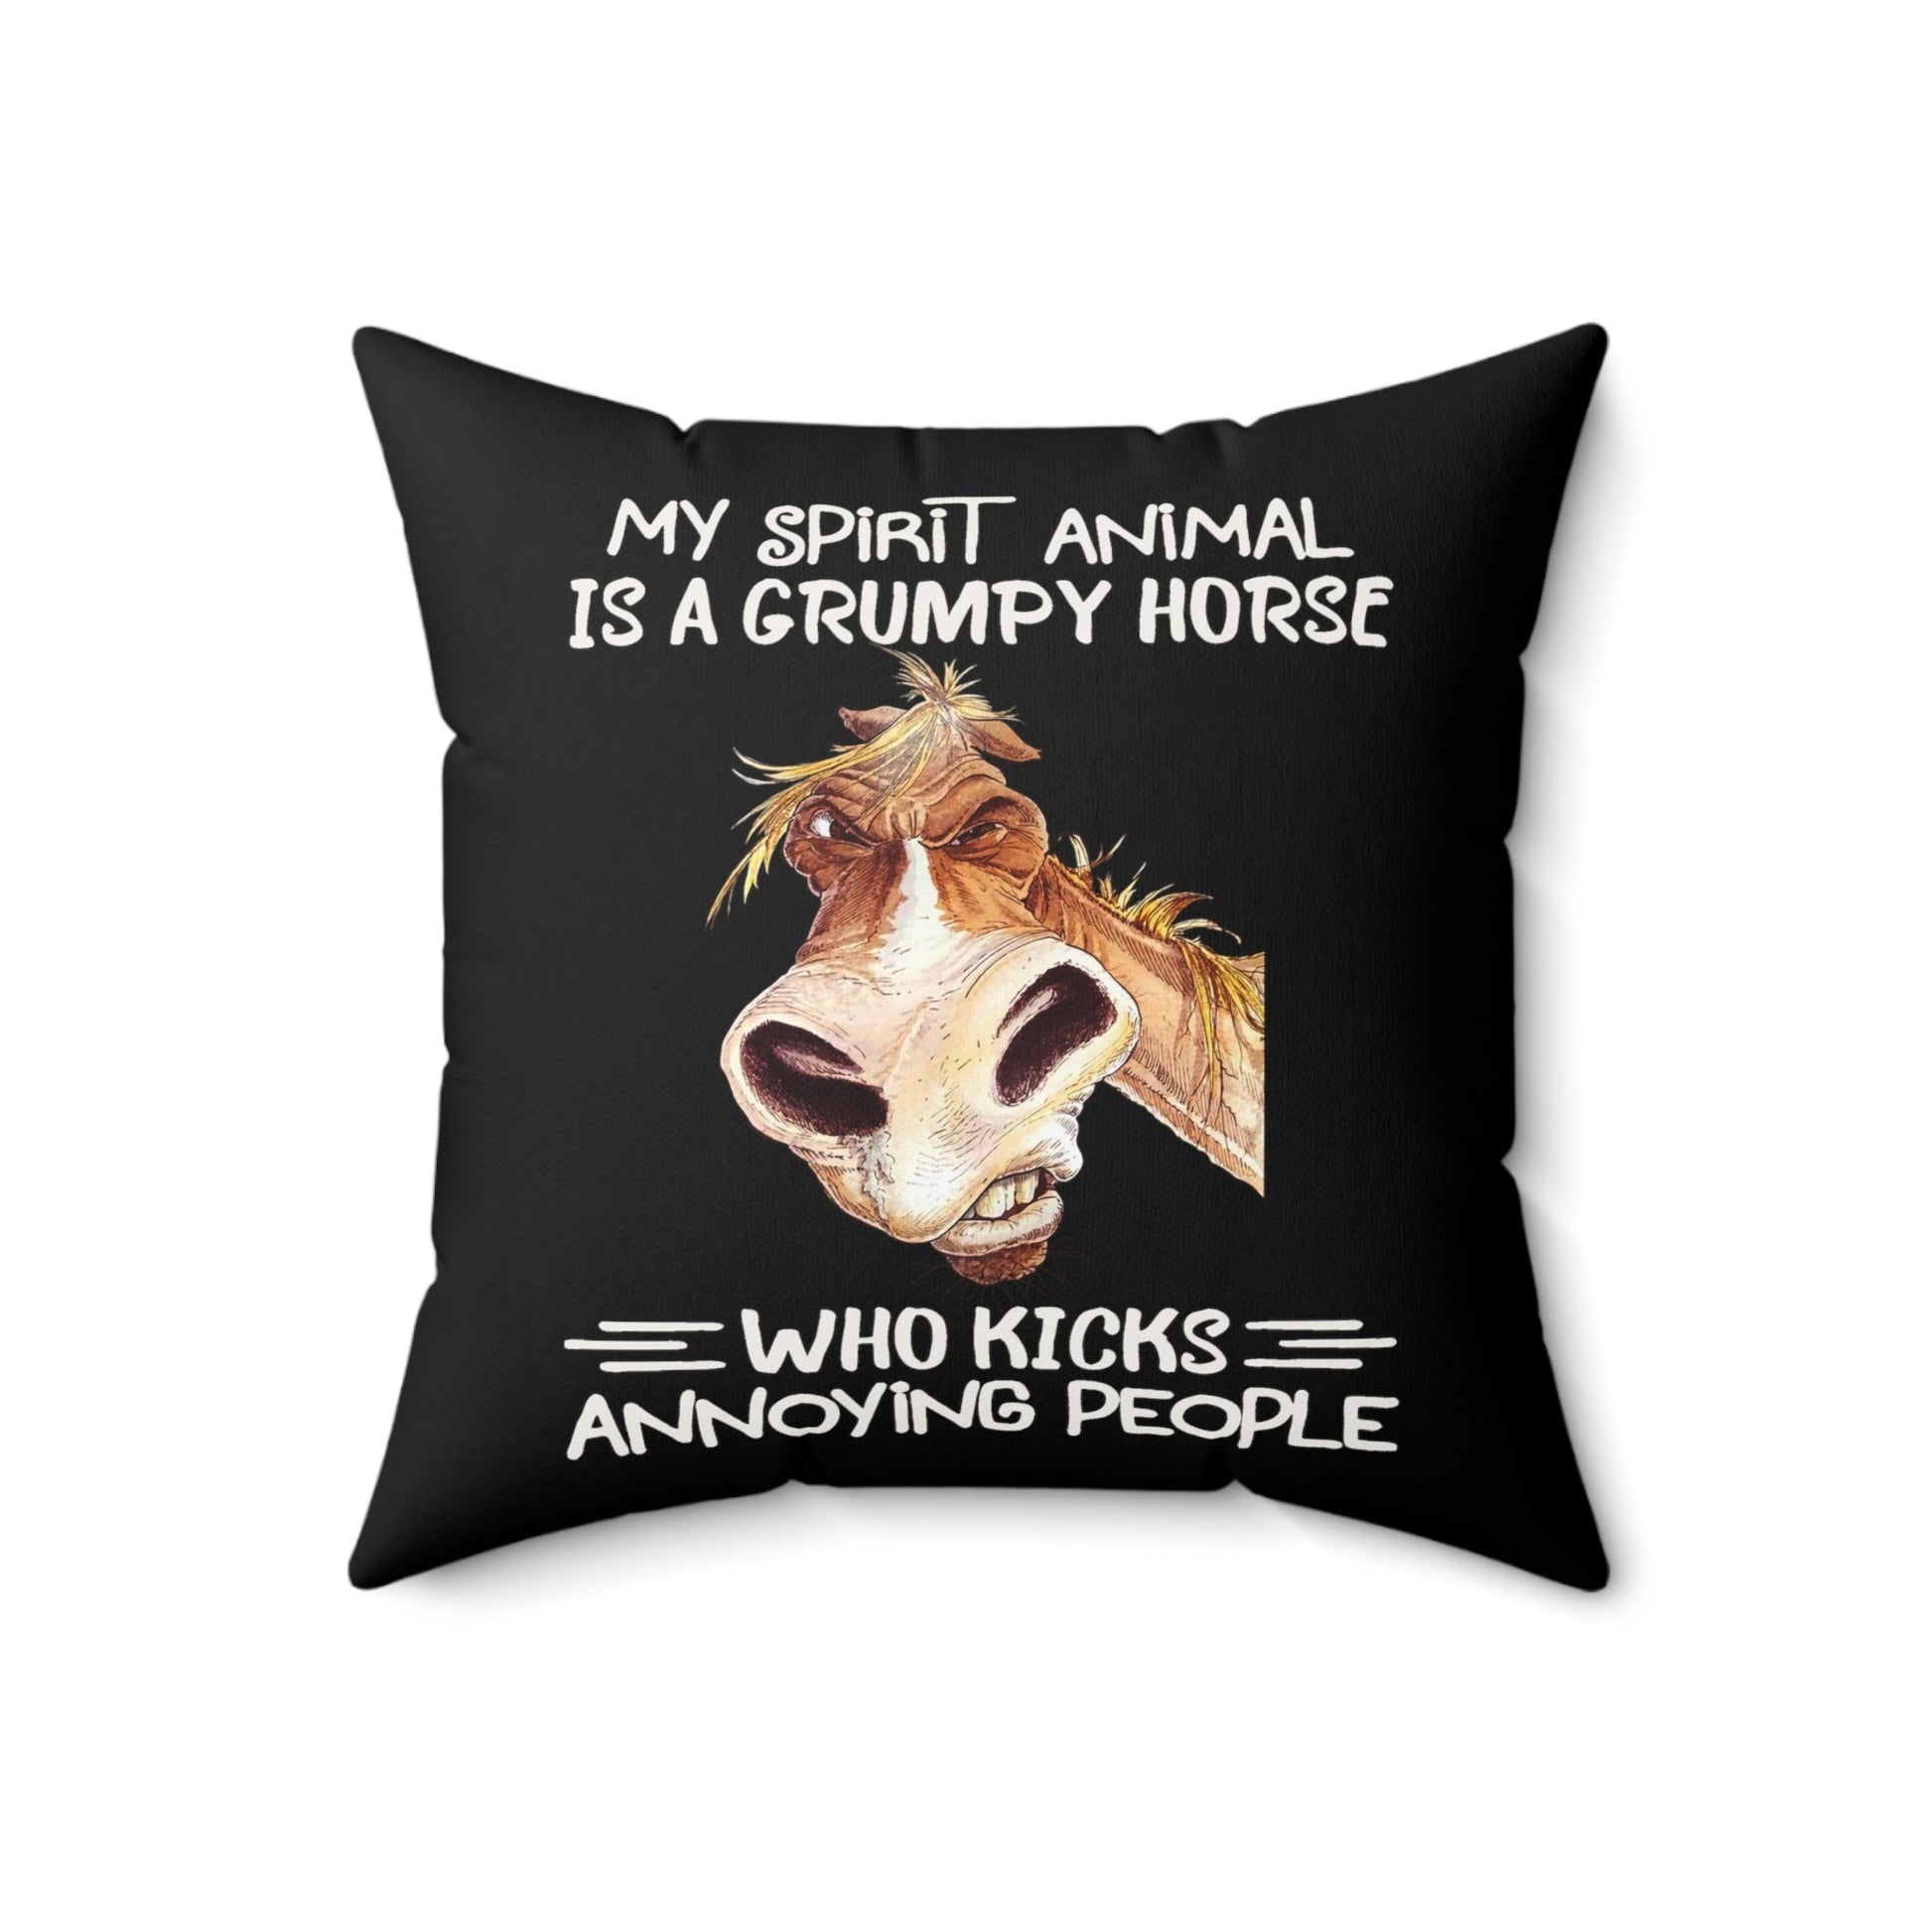 My spirit animal is a grumpy horse who kicks annoying people - Decorative Pillow - FlooredByArt